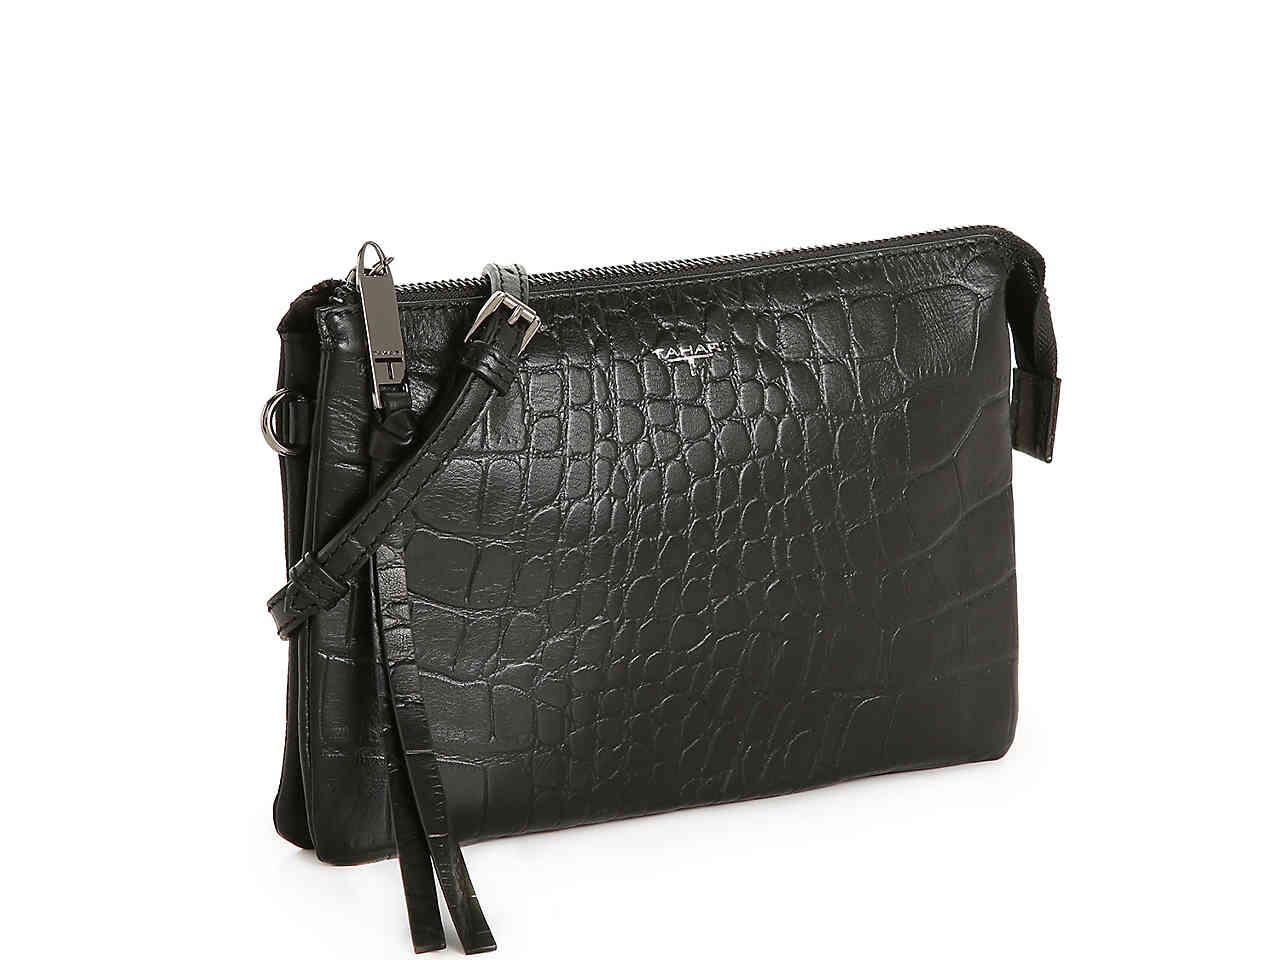 Tahari Heather Leather Crossbody Bag in Black - Lyst